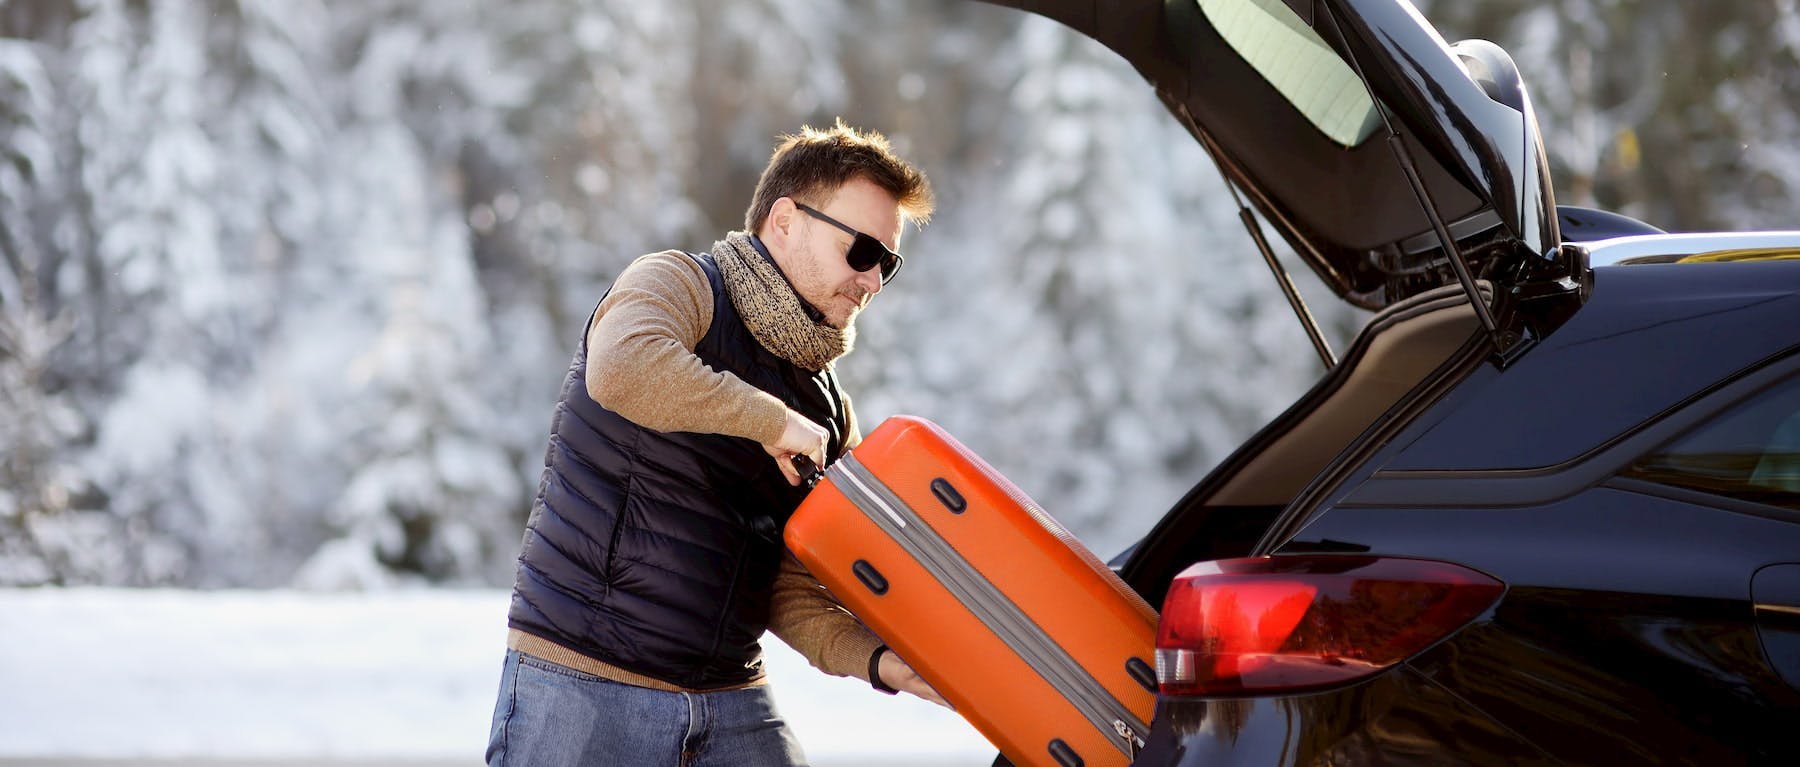 A man loading luggage in a car